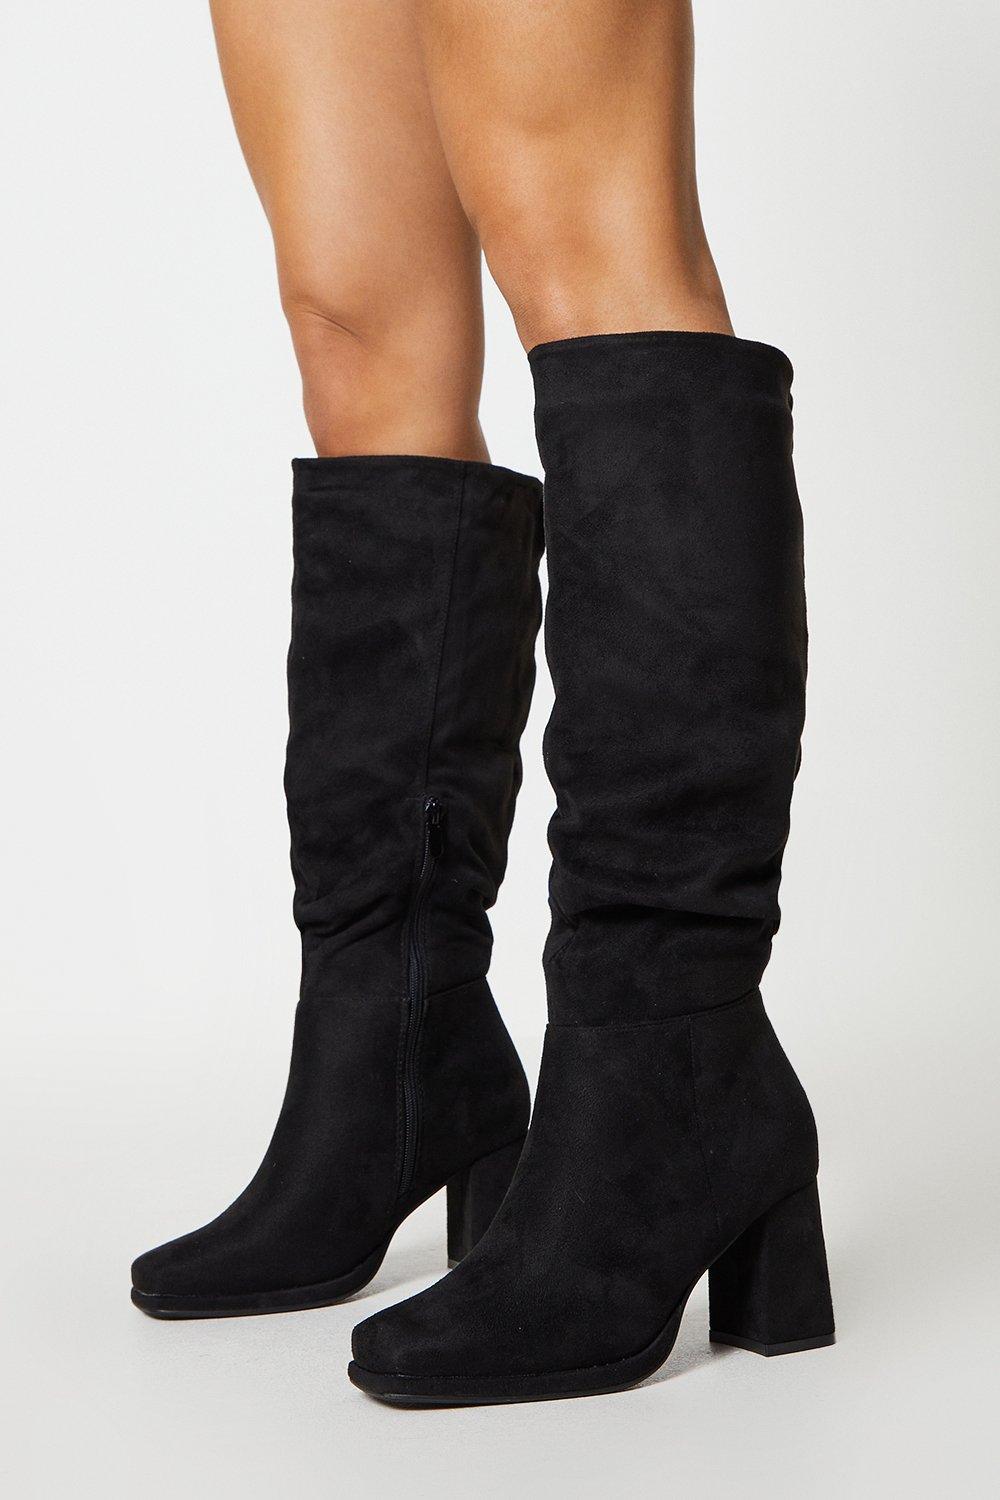 Women’s Wide Fit Karsa Block Heel Ruched Knee High Boots - natural black - 5